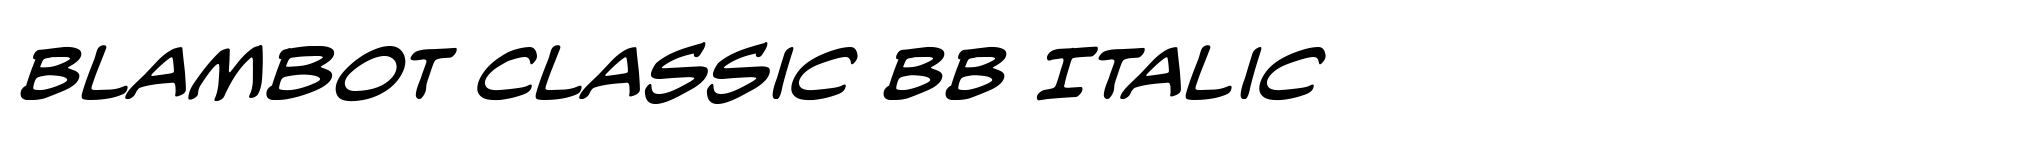 Blambot Classic BB Italic image